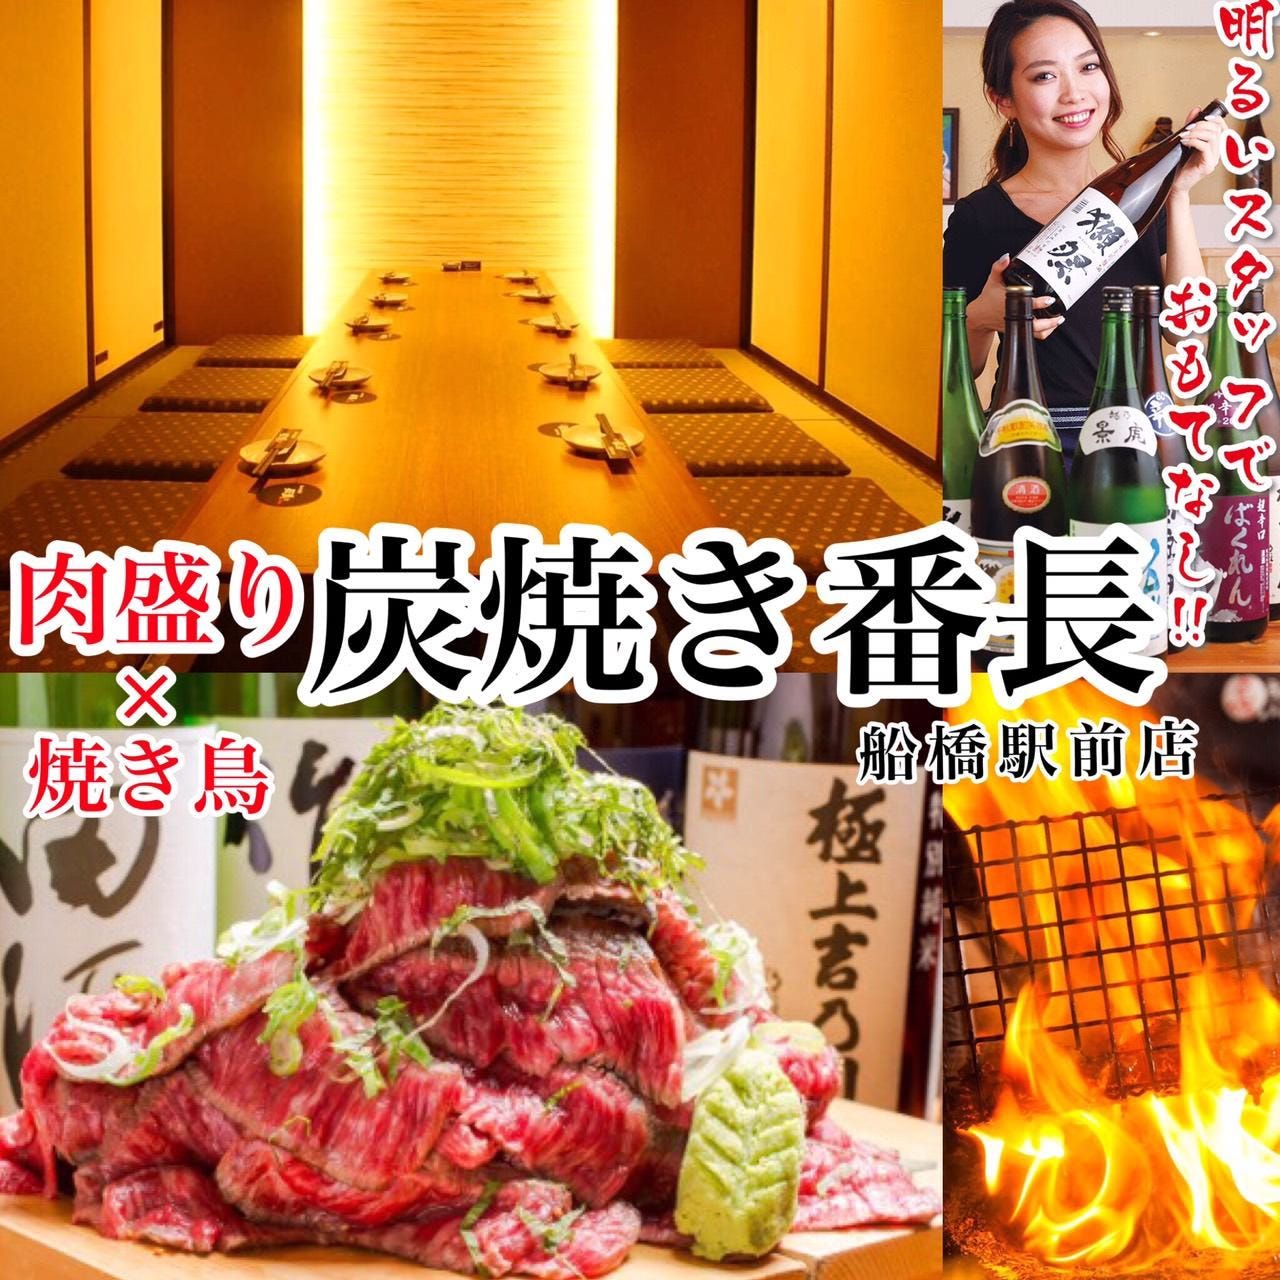 地鶏と鮮魚 全席個室居酒屋 炎 -えん- 横須賀中央本店 image